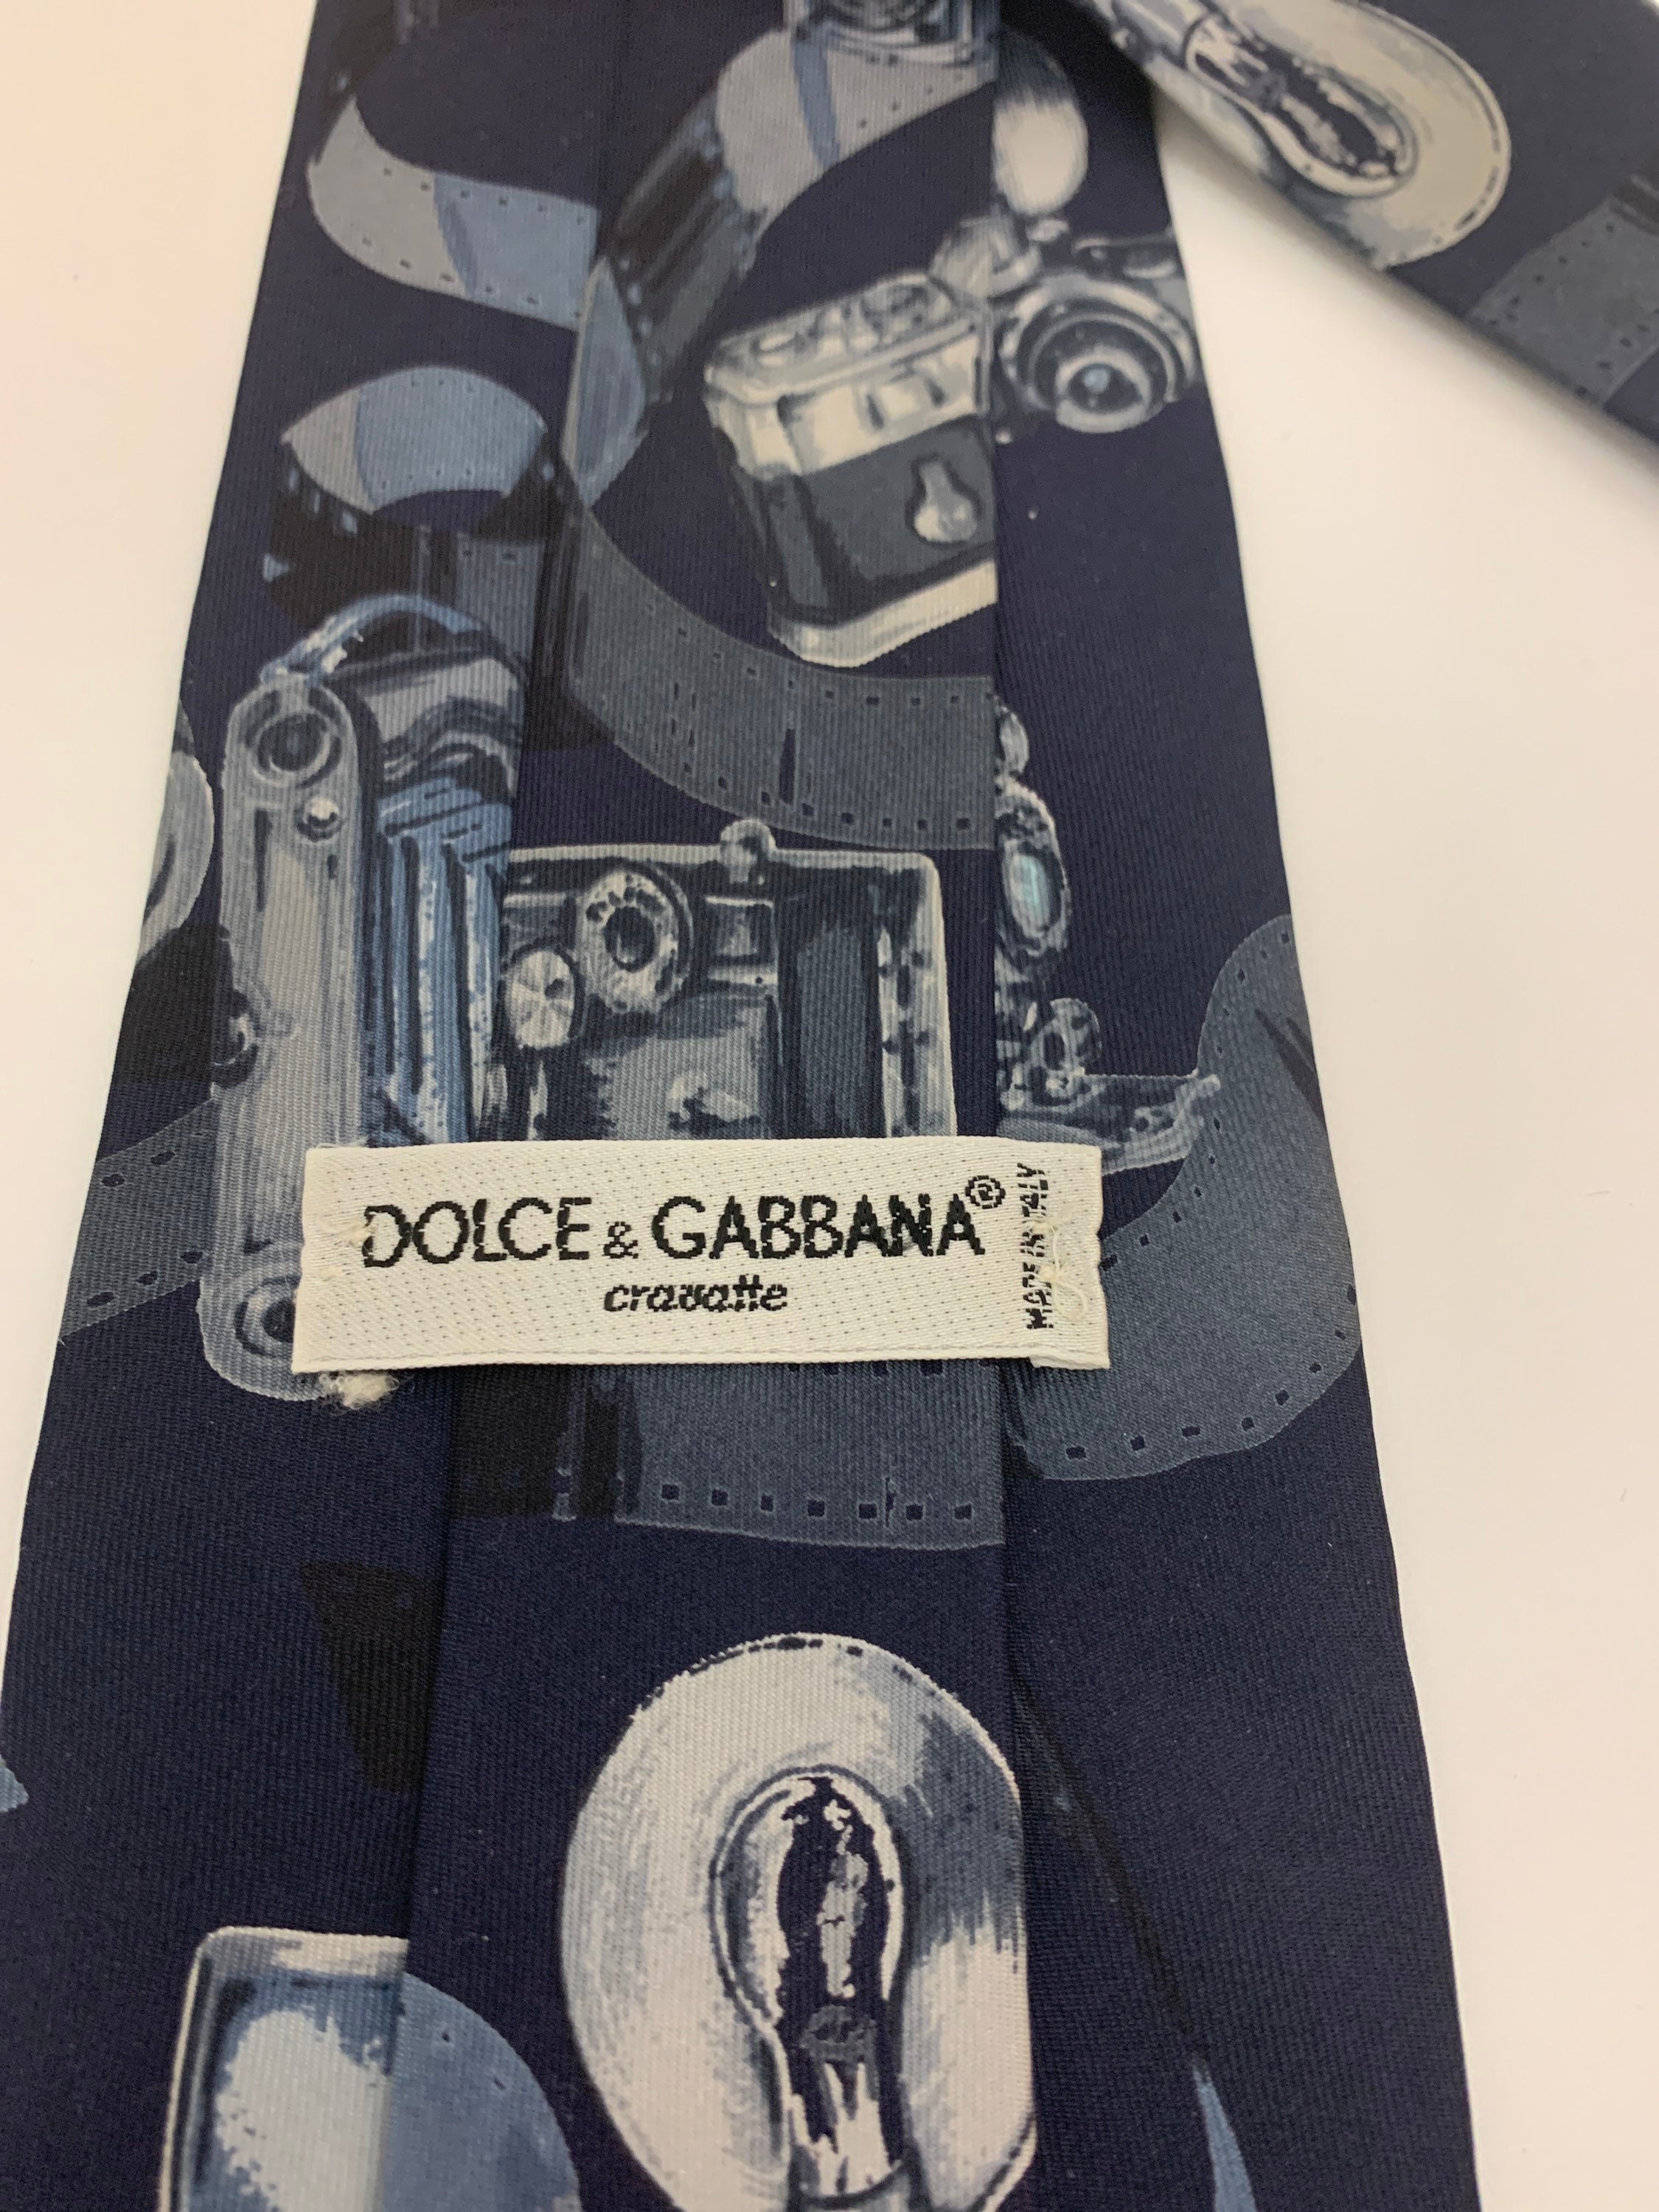 Dolce & Gabbana DOLCE & GABBANA blue super skinny silk tie authentic - NWT